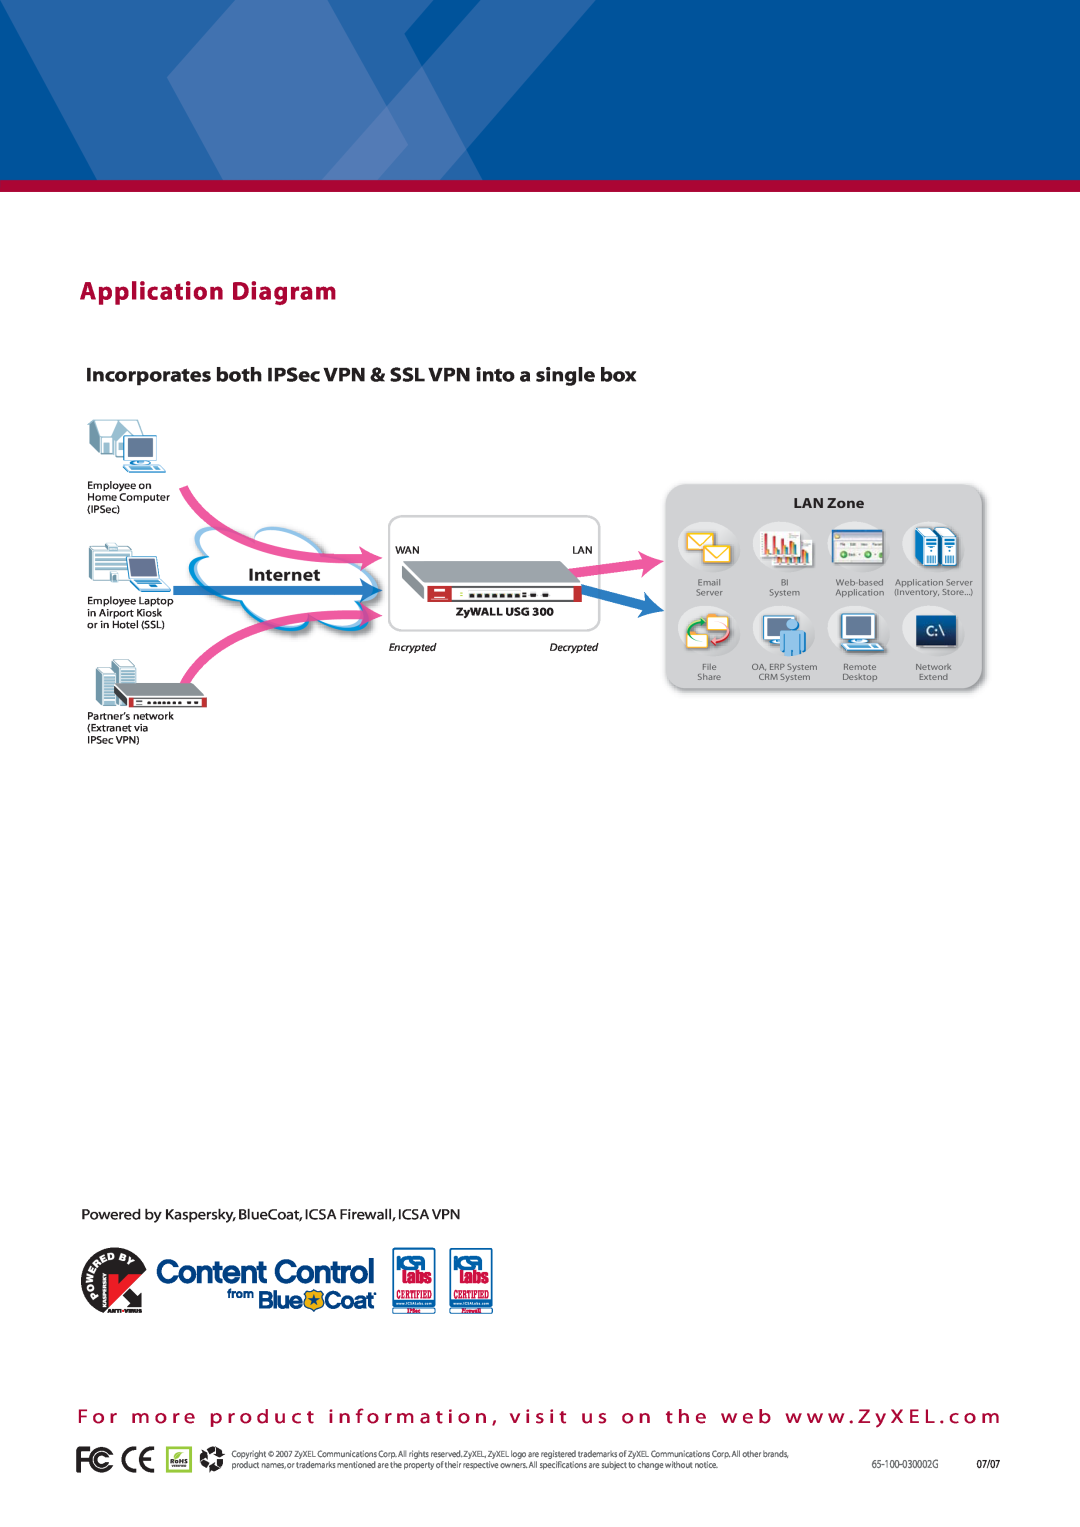 ZyXEL Communications USG 300 Application Diagram, LAN Zone, Incorporates both IPSec VPN & SSL VPN into a single box, Email 